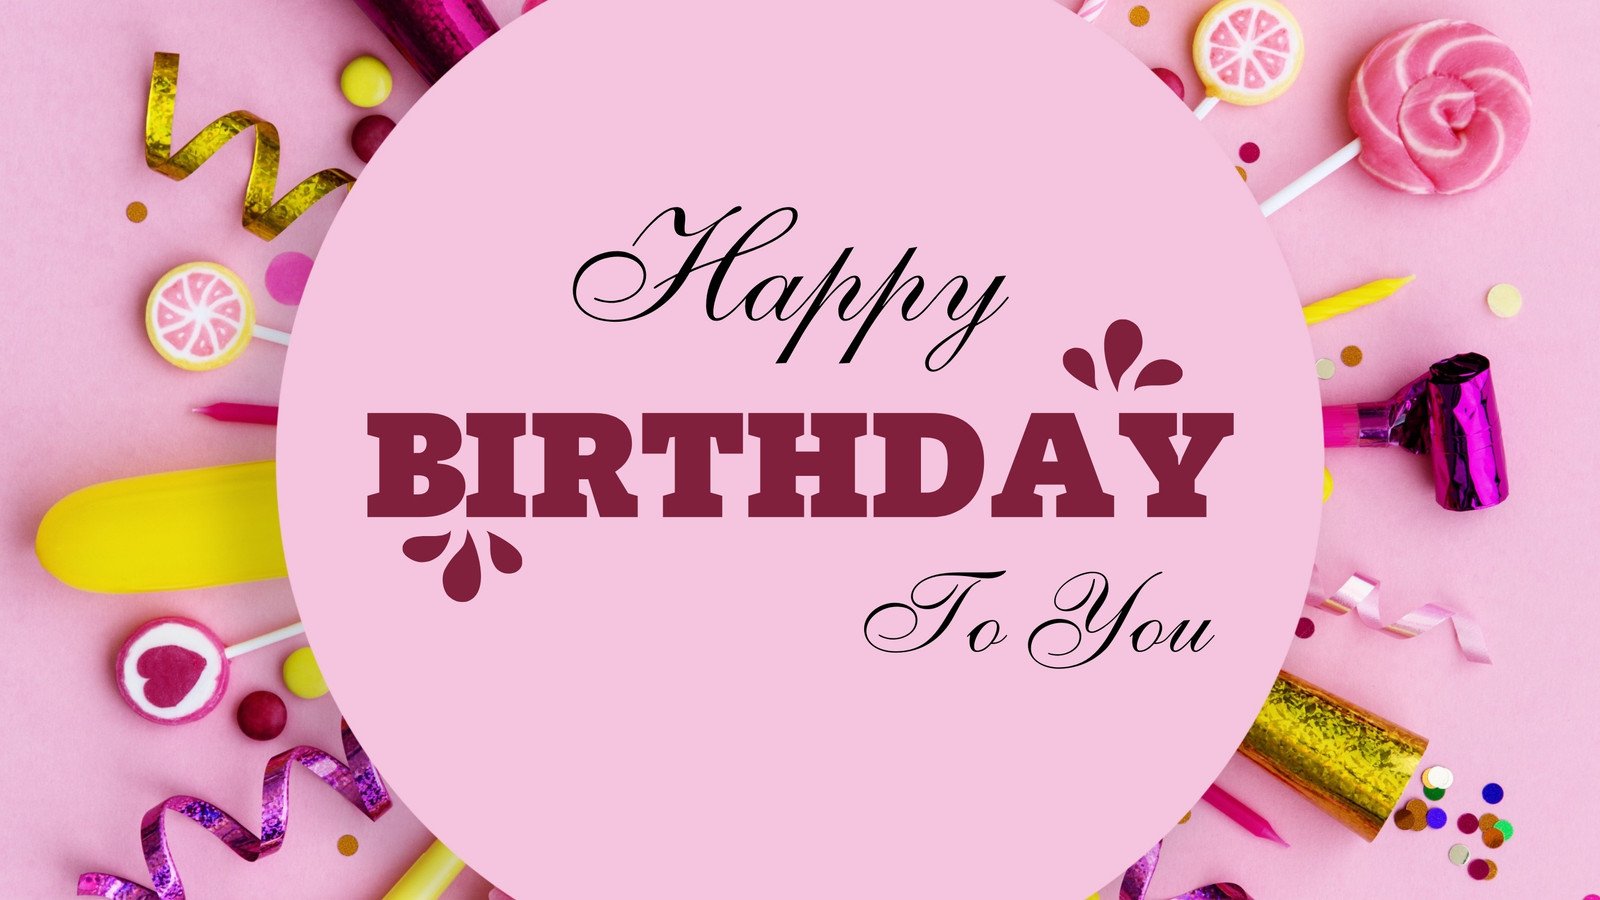 9,014 Wish You Happy Birthday Images, Stock Photos & Vectors | Shutterstock